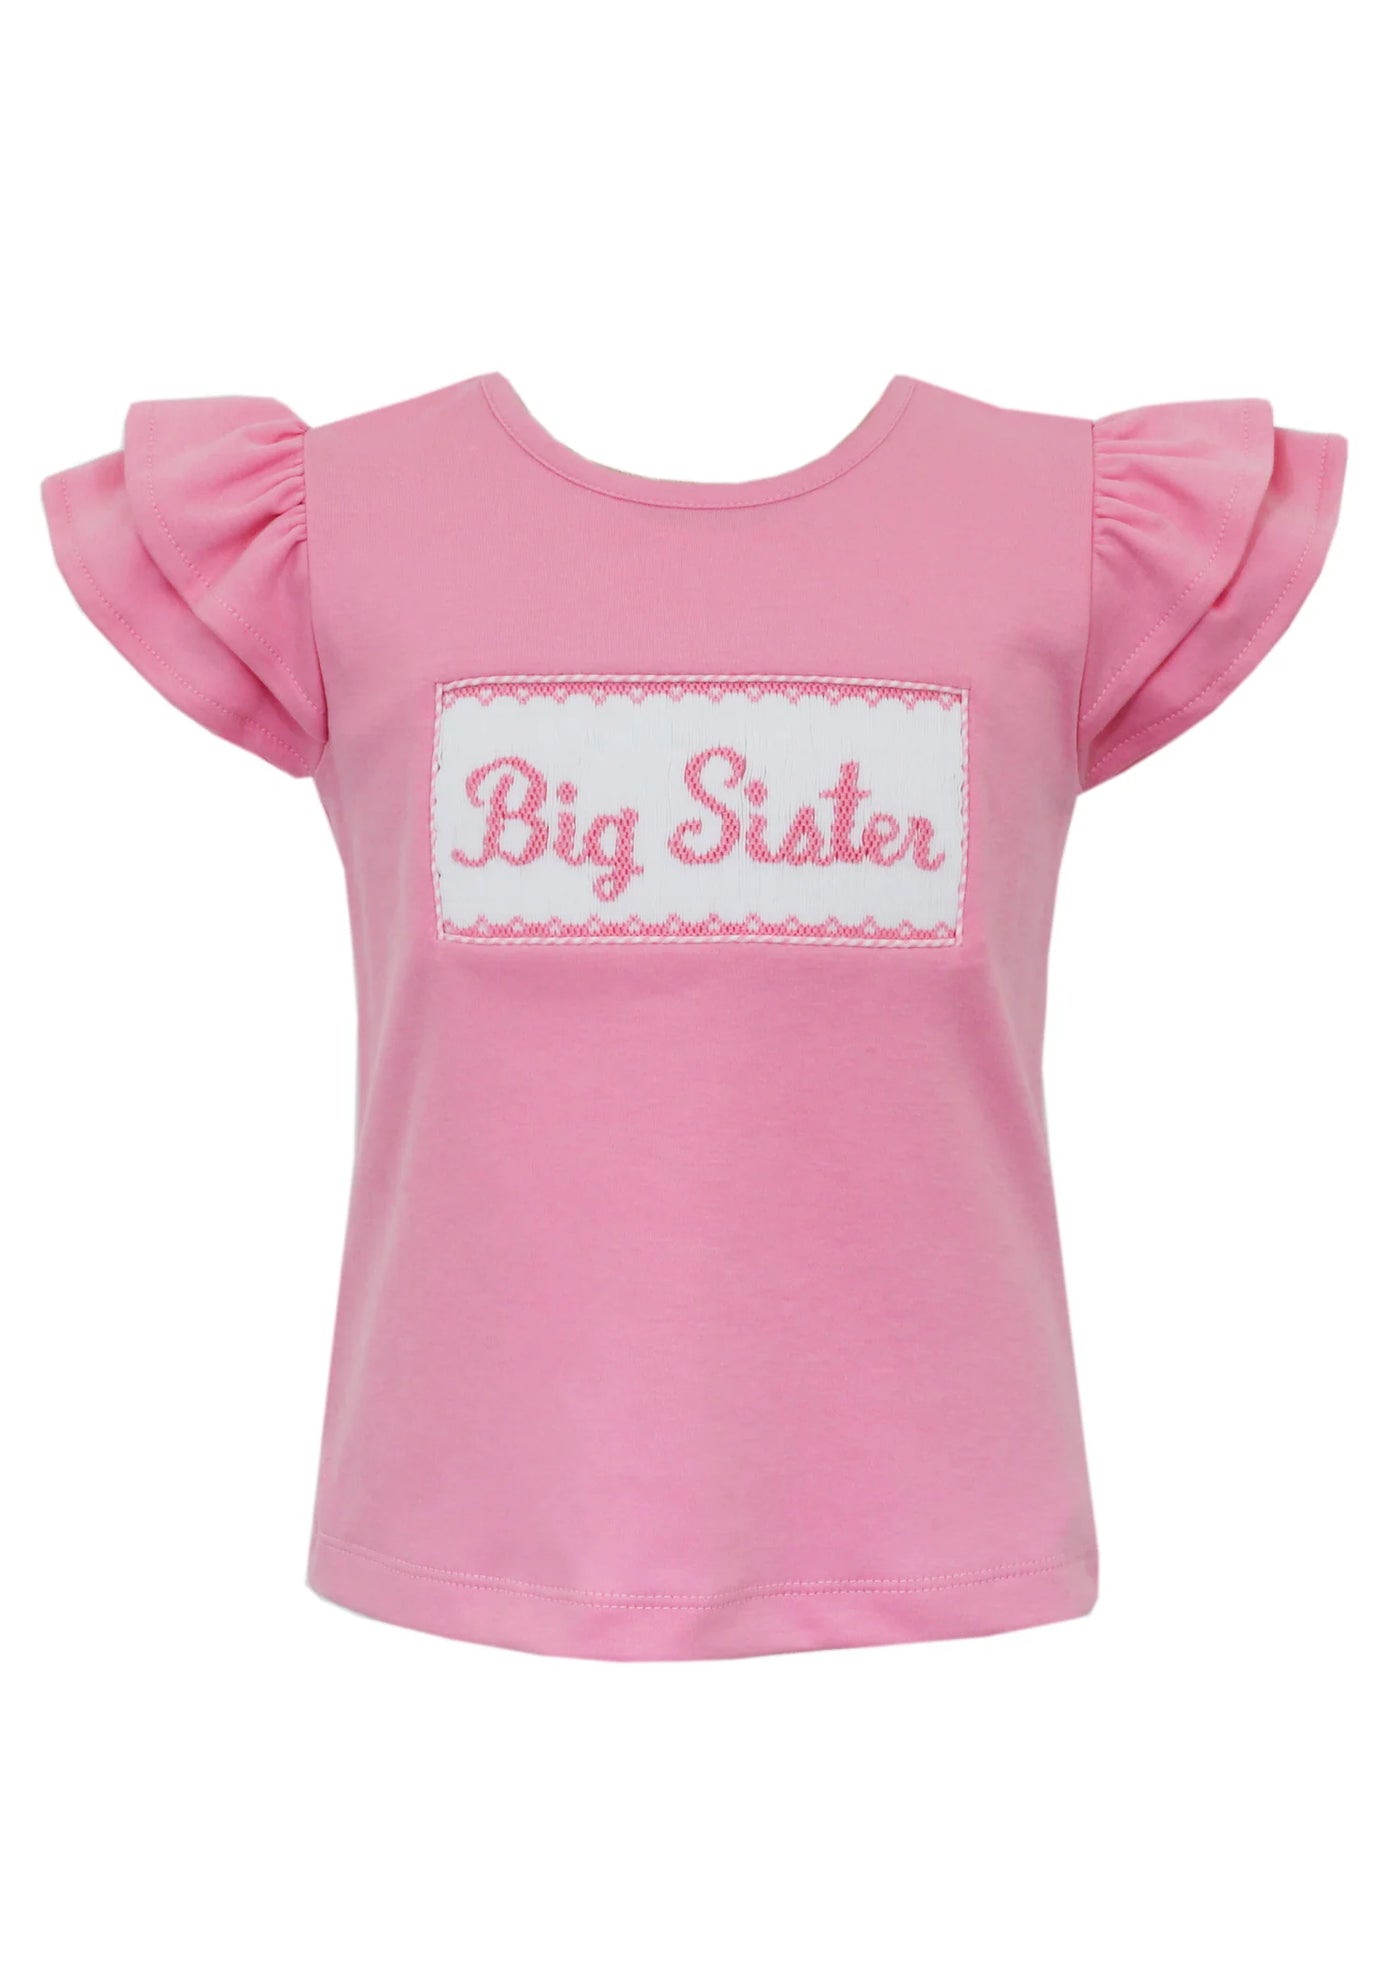 Big Sister - Pink Knit Girl's T-shirt - Breckenridge Baby